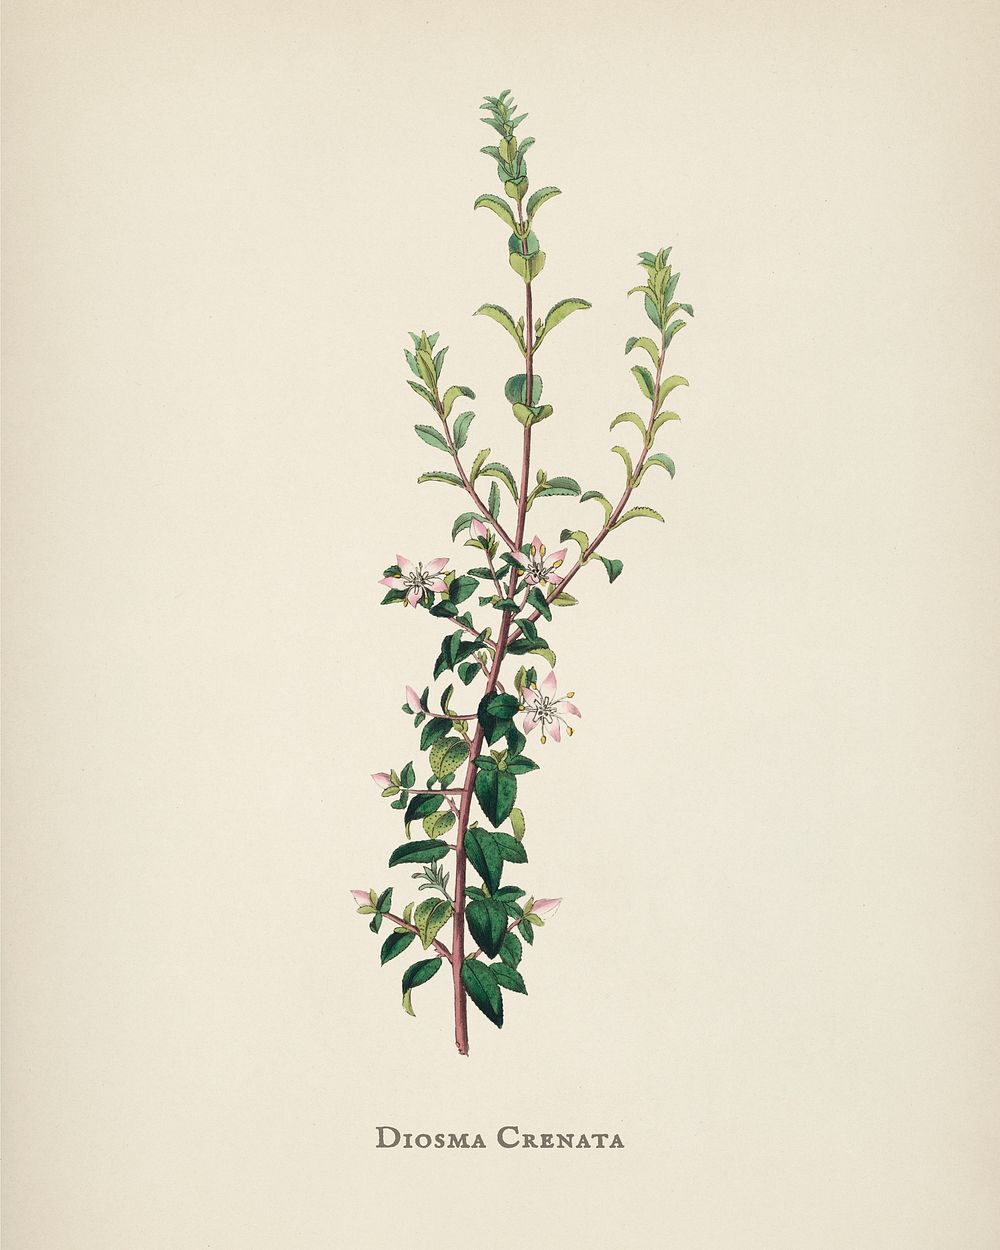 Diosma crenata illustration from Medical Botany (1836) by John Stephenson and James Morss Churchill.